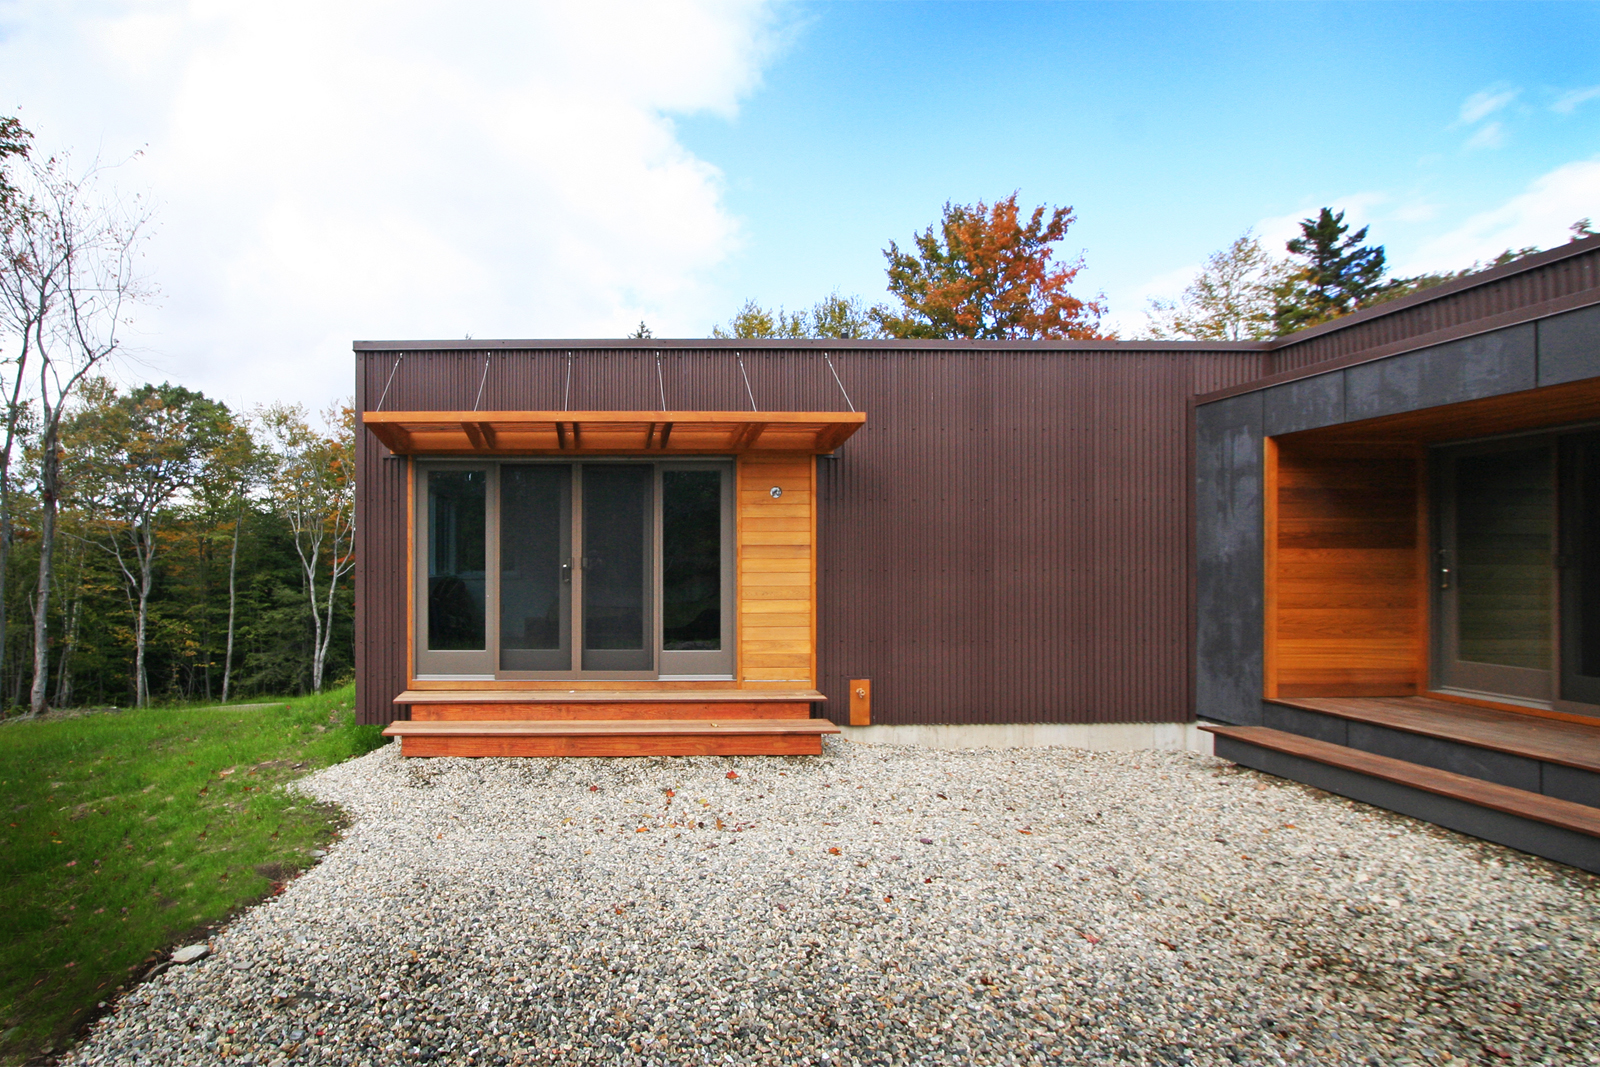 04-res4-resolution-4-architecture-modern-modular-home-prefab-house-vermont-cabin-exterior.jpg